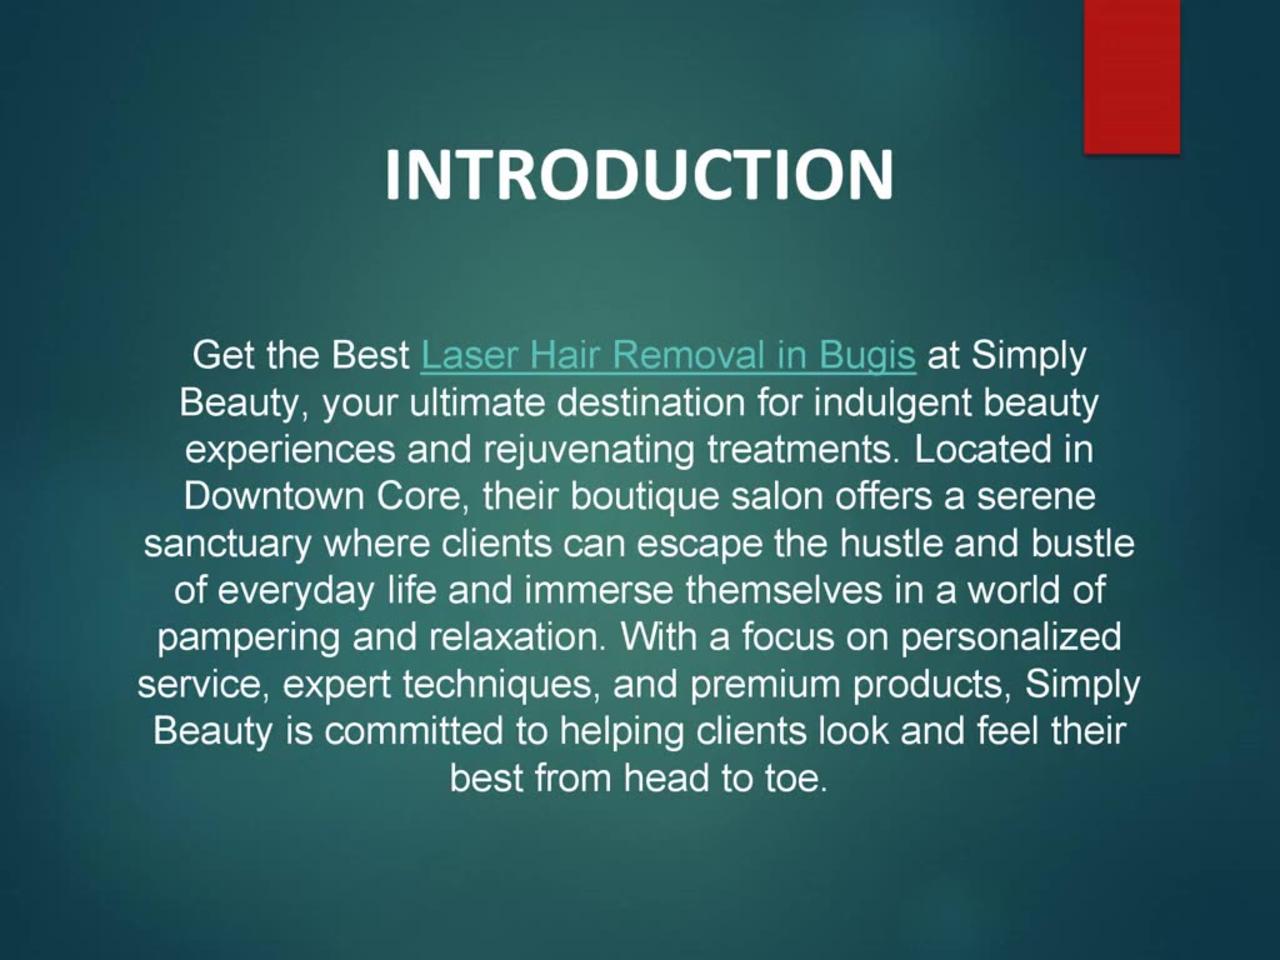 Get the Best Laser Hair Removal in Bugis